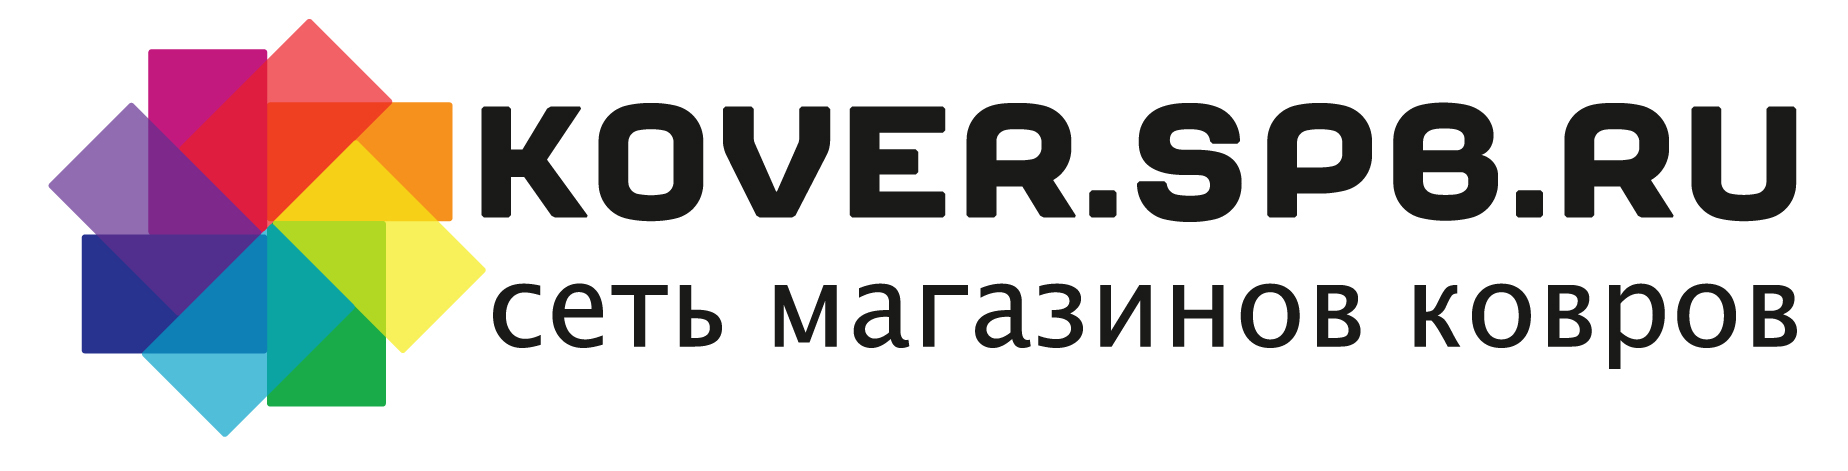 kover.spb.ru